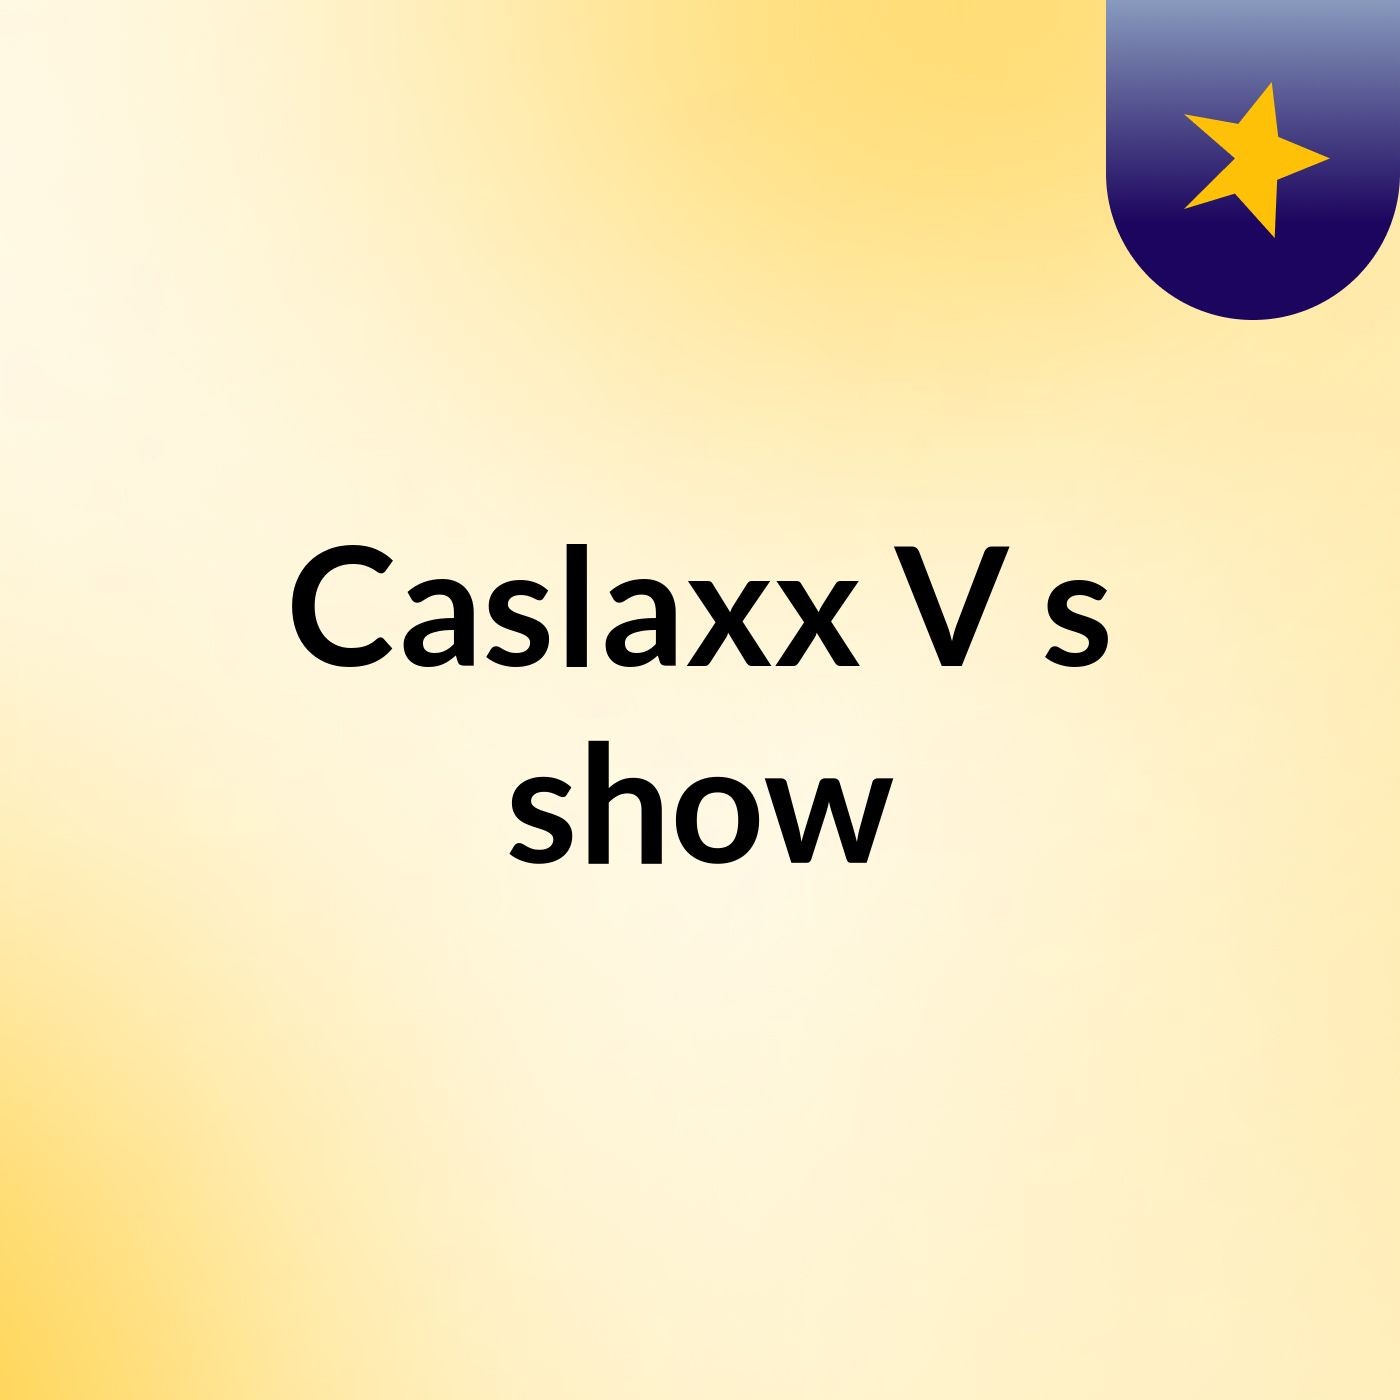 Caslaxx V's show